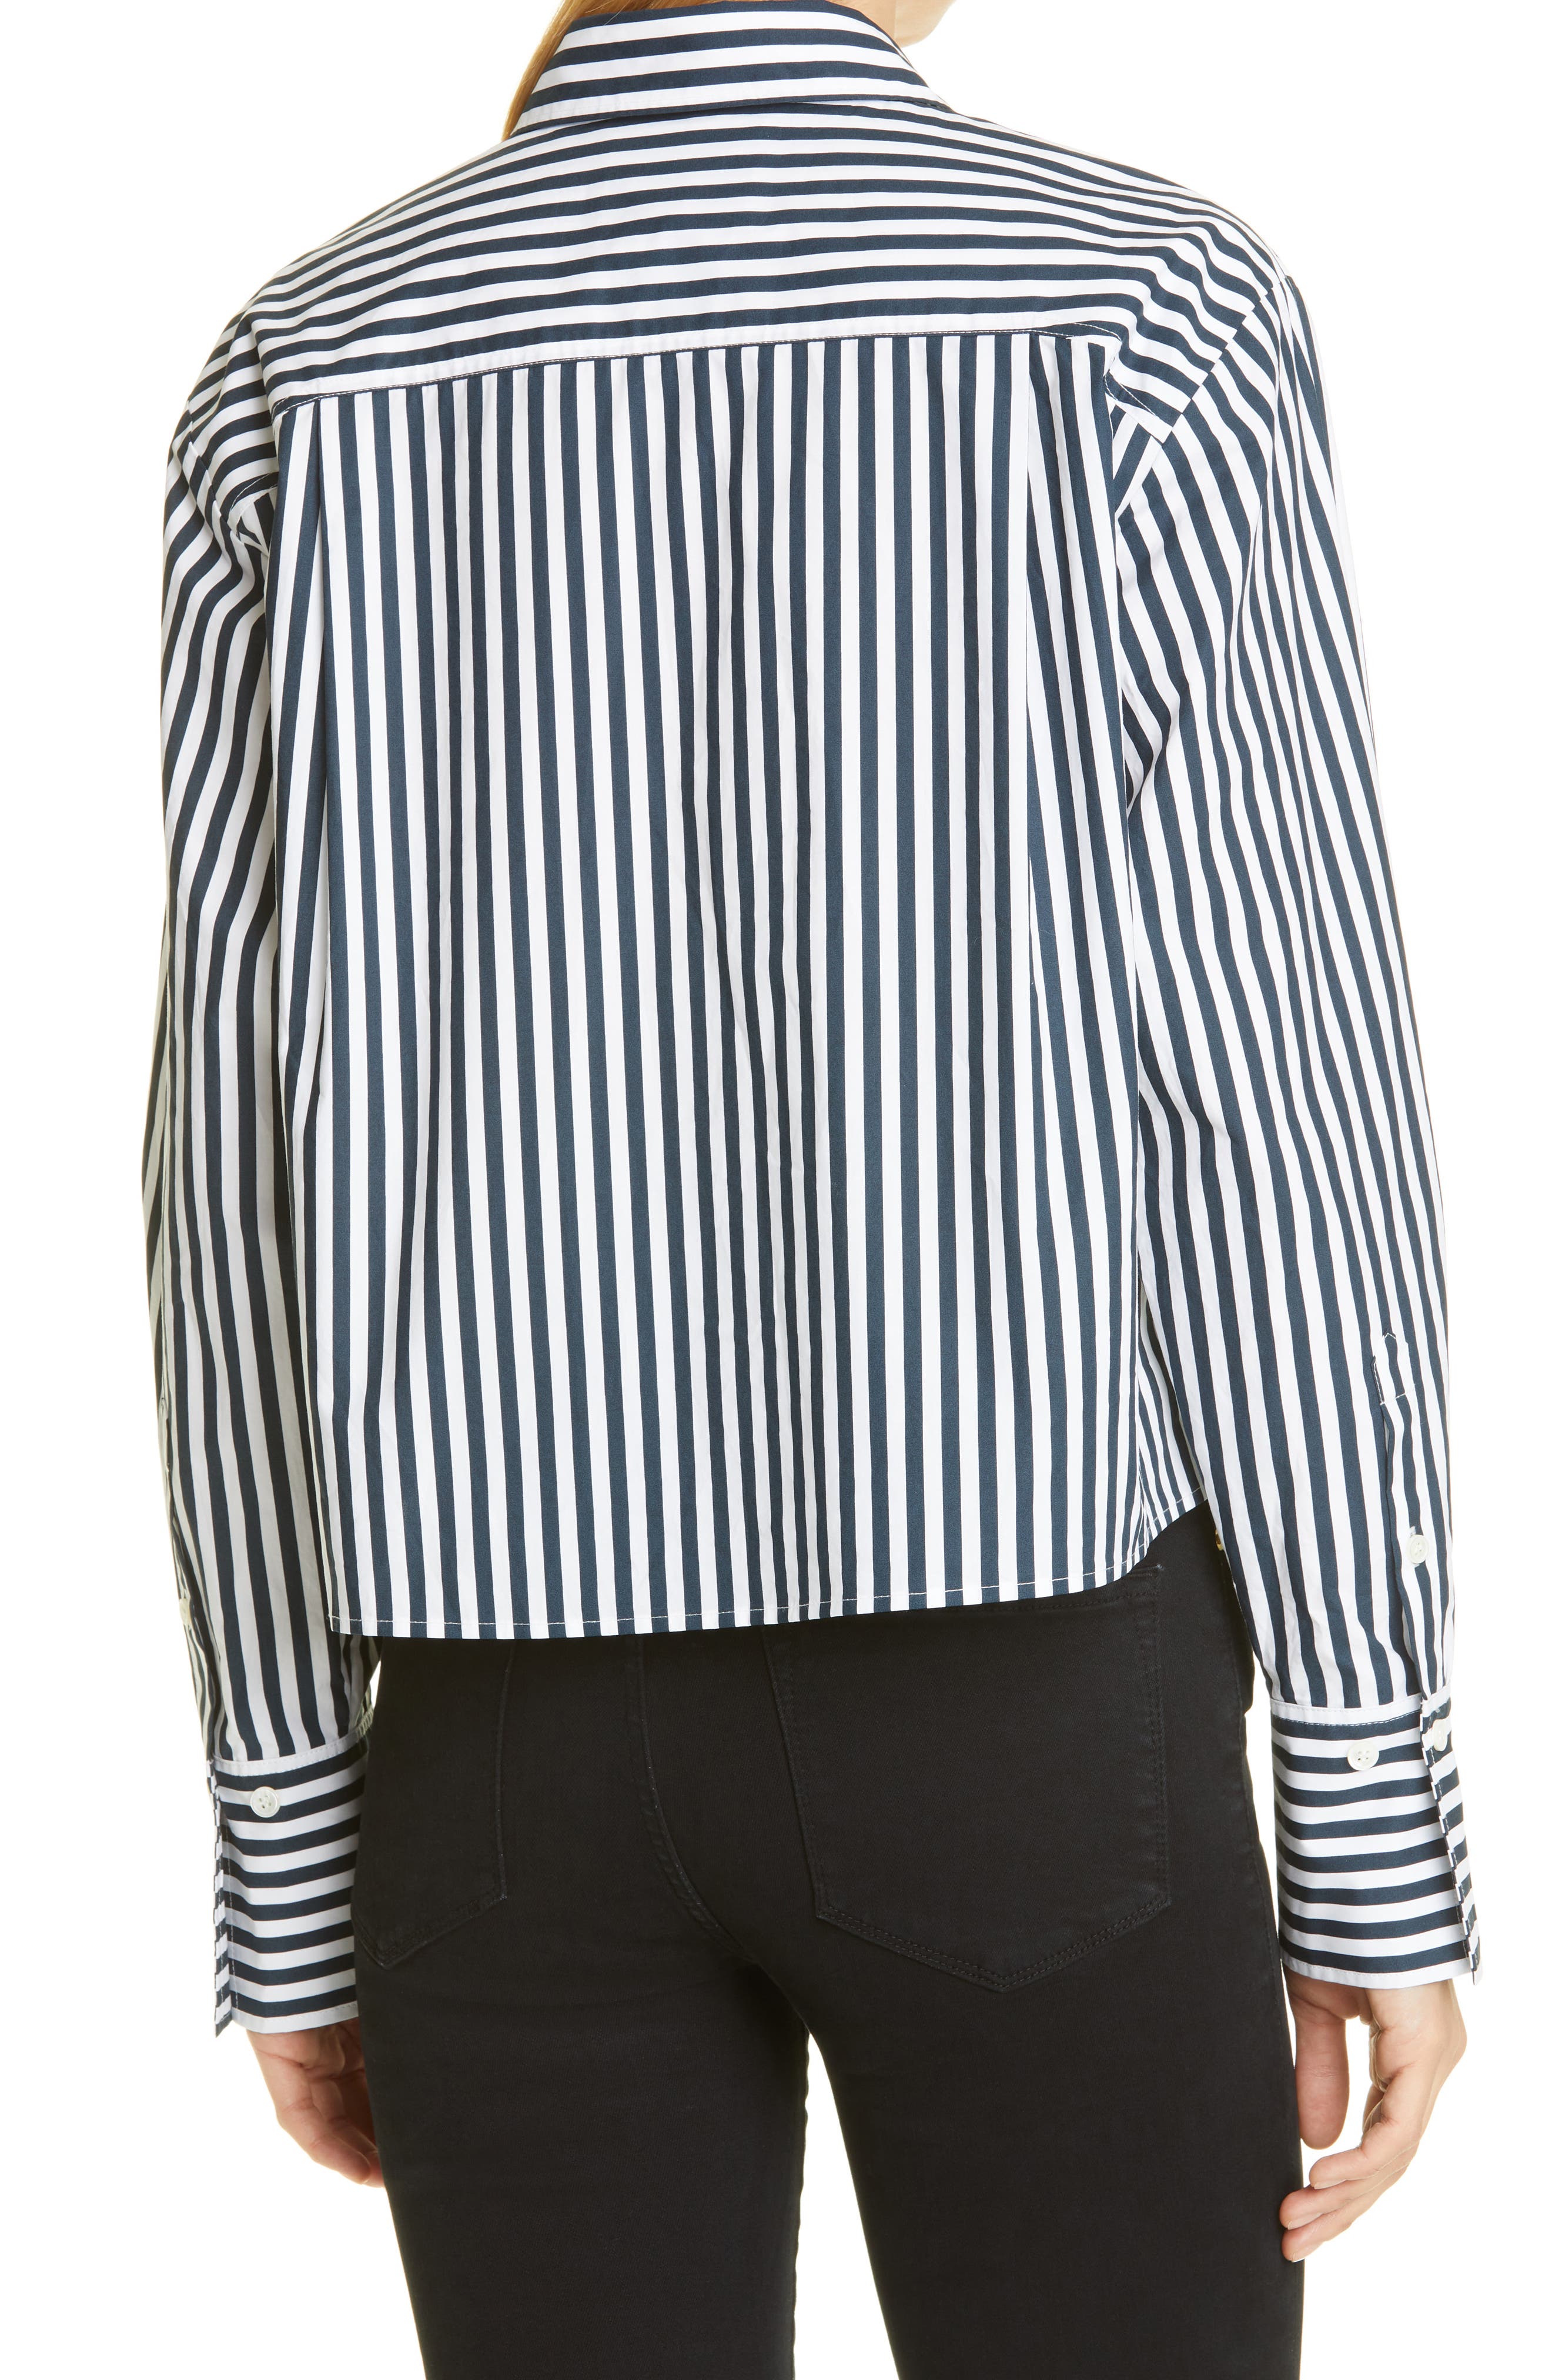 Fashion Vertical Stripes Womens Denim Skirt Dark BLUE M Asian Size 